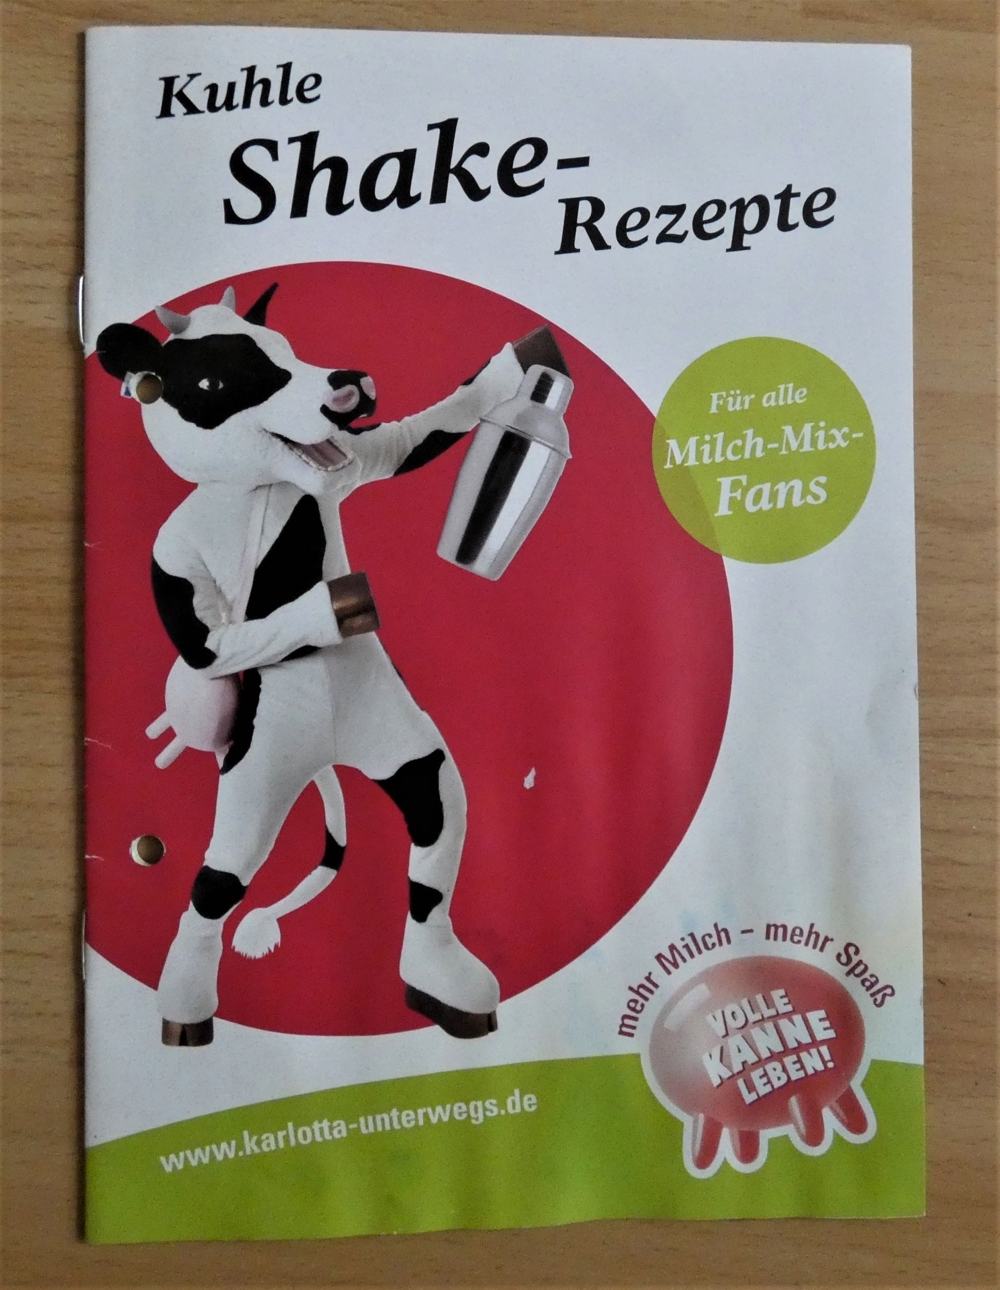 Kuhle Shake-Rezepte - Für alle Milch-Mix-Fans -